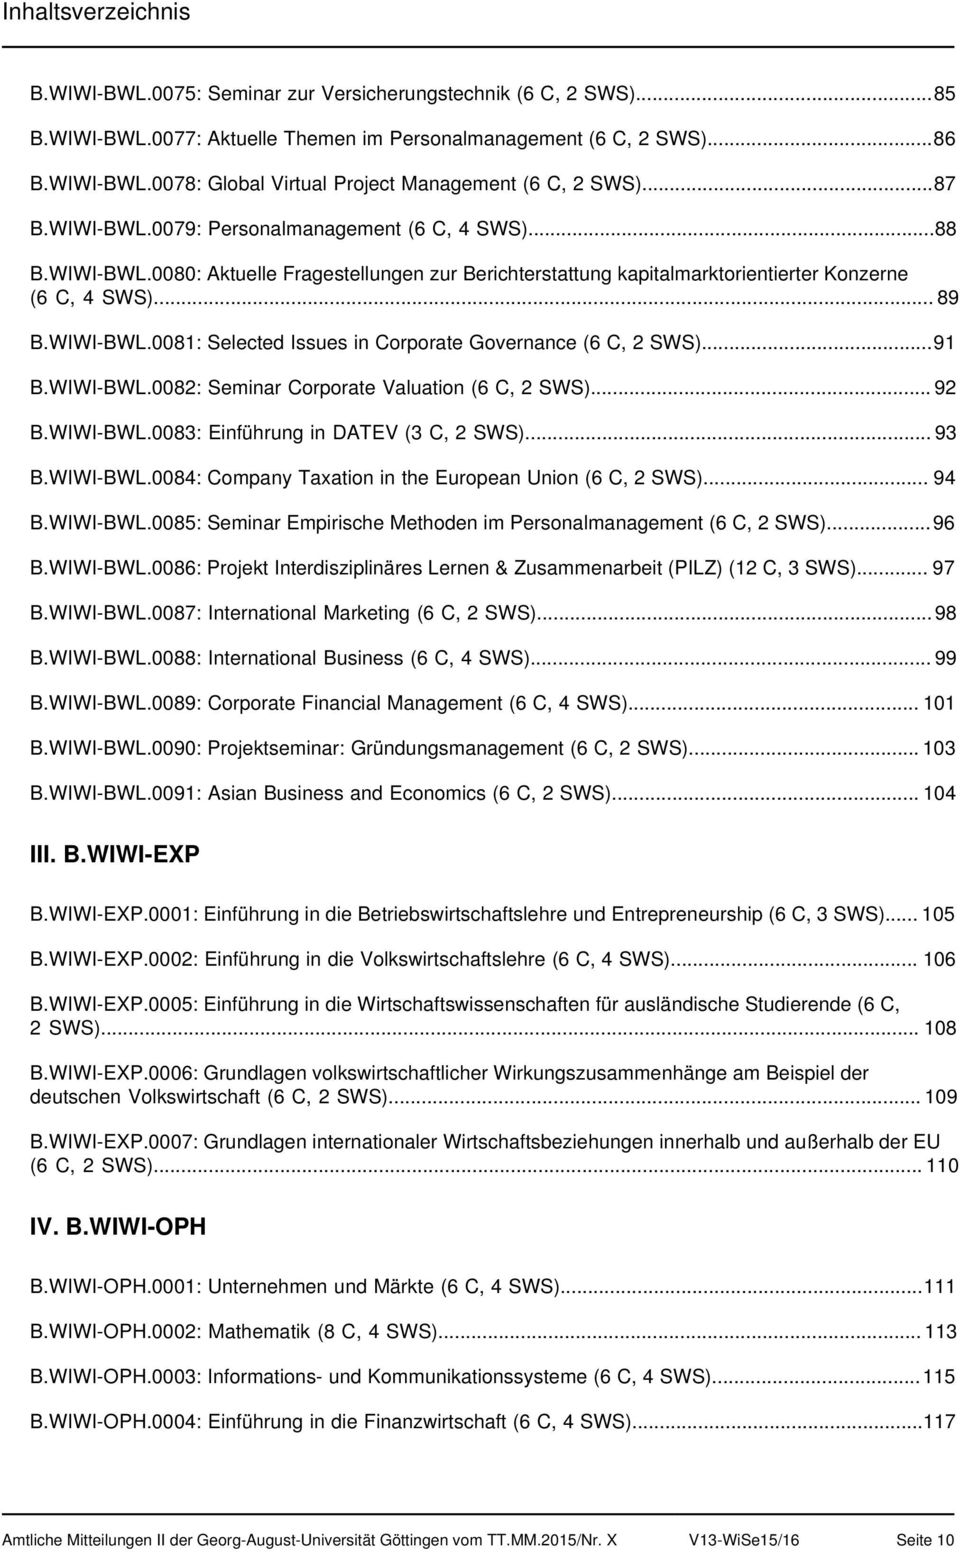 ..91 B.WIWI-BWL.0082: Seminar Corporate Valuation (, )... 92 B.WIWI-BWL.0083: Einführung in DATEV (3 C, )... 93 B.WIWI-BWL.0084: Company Taxation in the European Union (, )... 94 B.WIWI-BWL.0085: Seminar Empirische Methoden im Personalmanagement (, ).